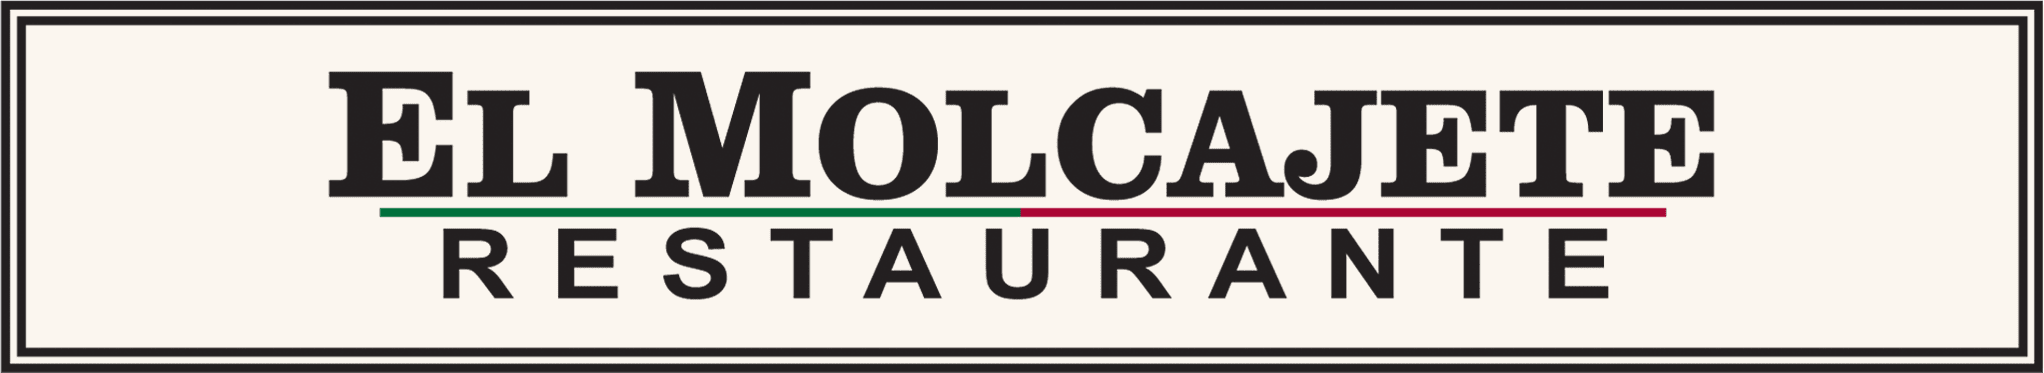 El Molcajete logo